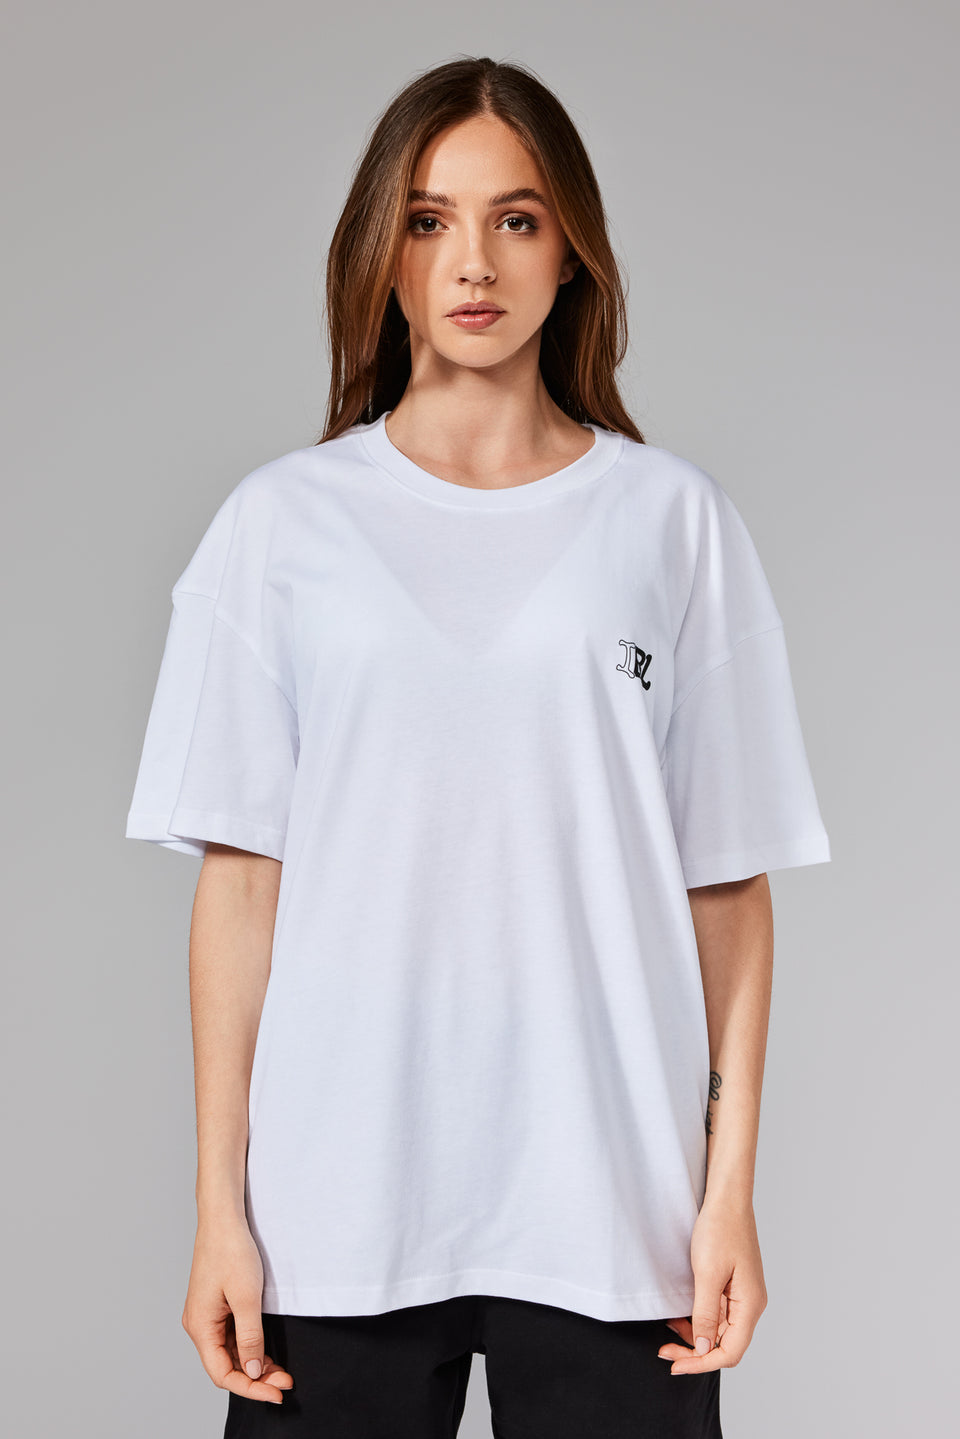 IBL Wavy T-shirt - White